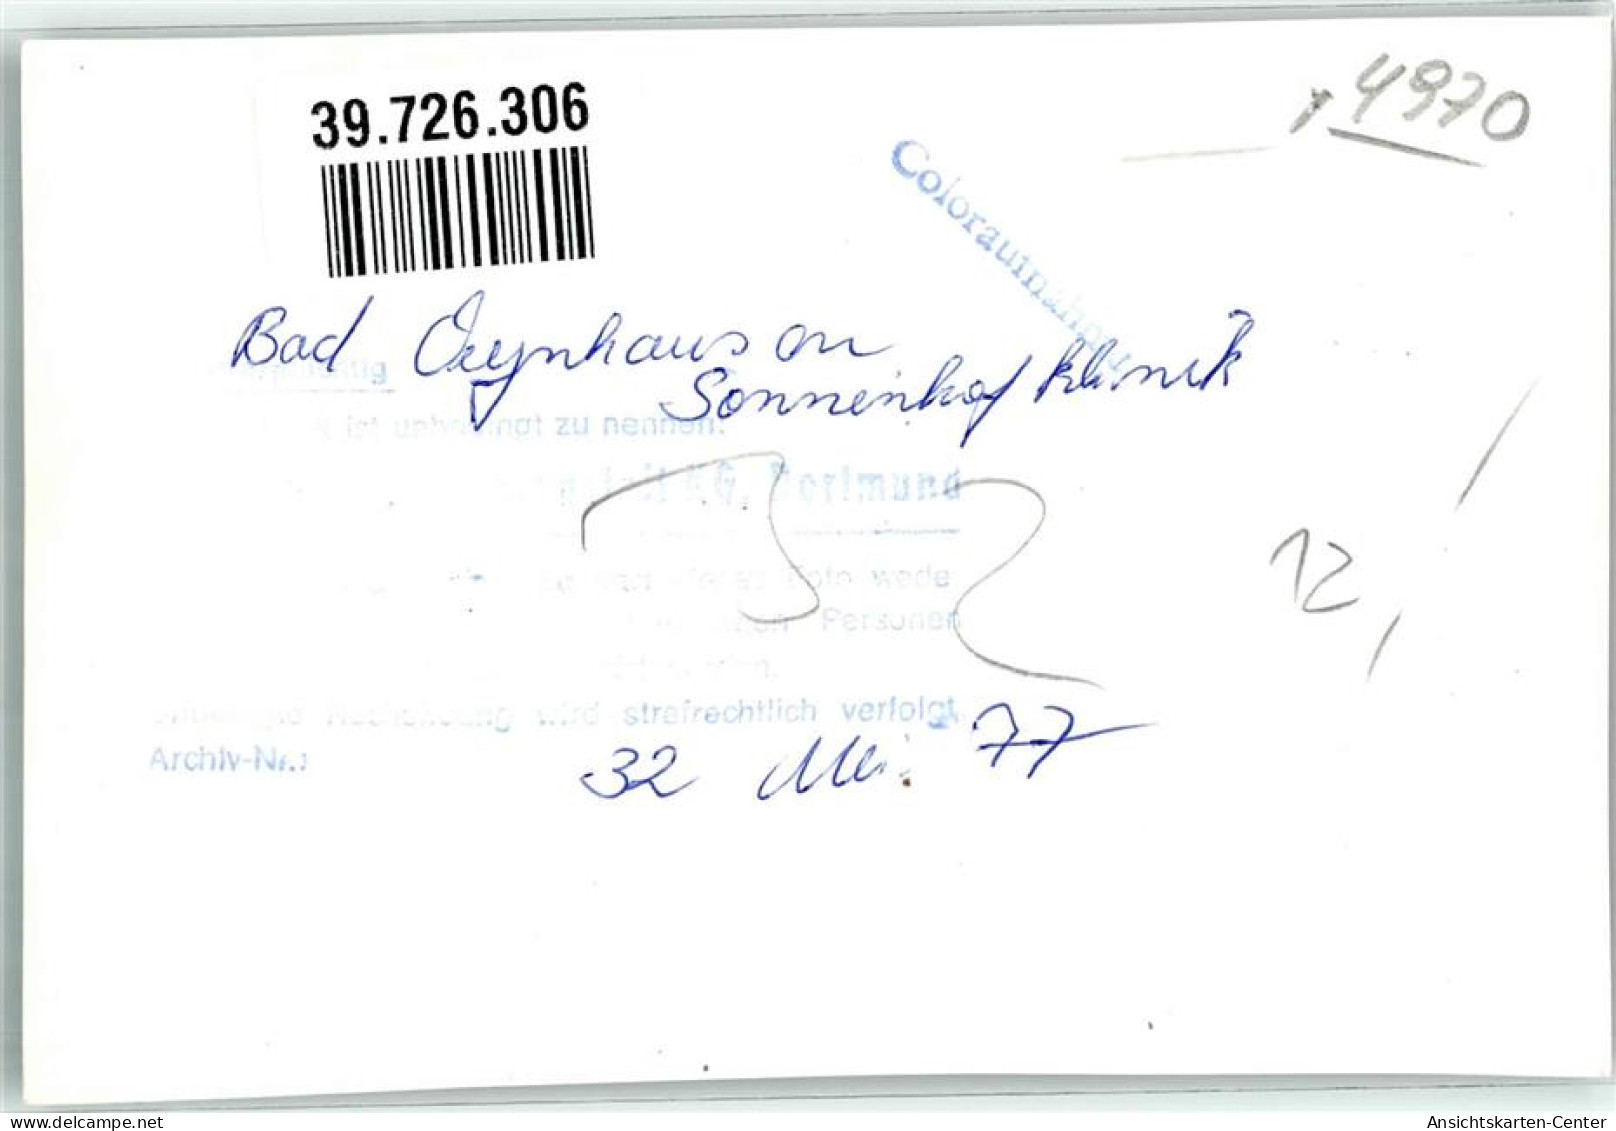 39726306 - Bad Oeynhausen - Bad Oeynhausen